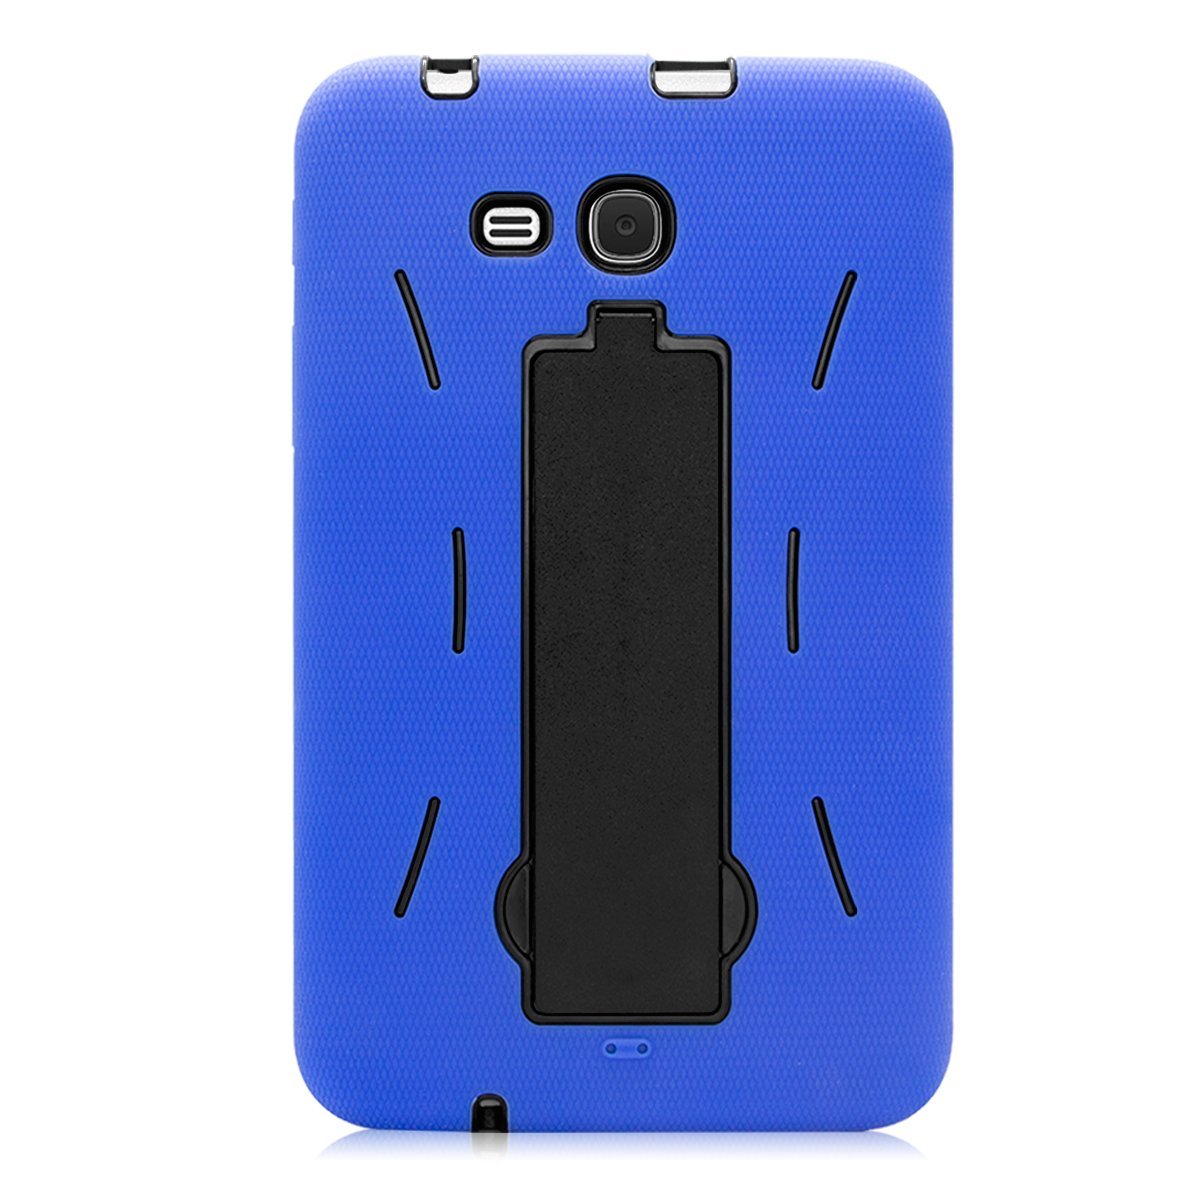 For Galaxy Tab E Lite 7.0 Case , Galaxy Tab 3 Lite 7.0 Case , Mignova Rugged Heavy Duty Kids Friendly Case For Samsung Galaxy E Lite 7.0 / Tab 3 Lite 7.0 SM-T110 / SM-T111 / SM-T113 / SM-T116(Blue) - image 3 of 7